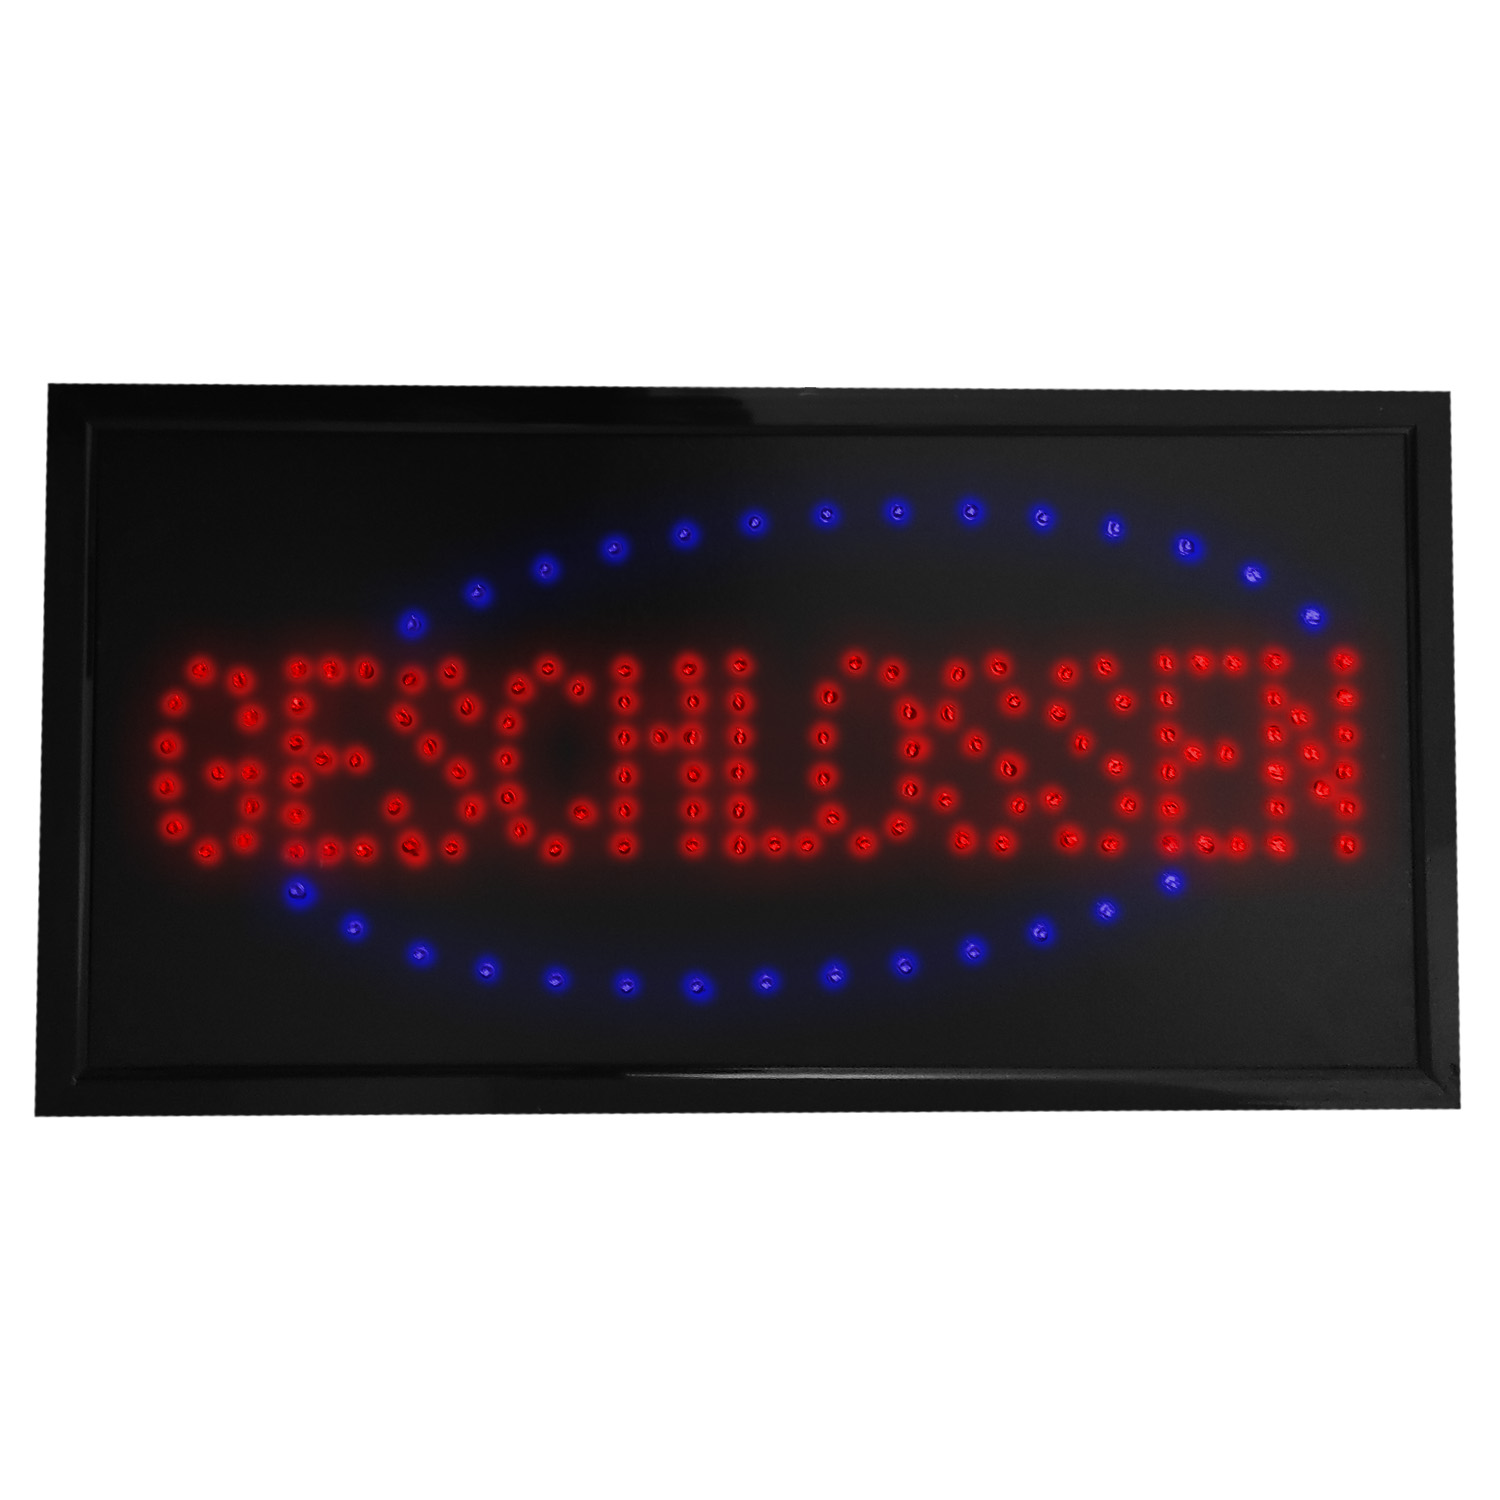 LED Hinweisschild  Closed - Open , Farbmodi getrennt steuerbar grün -  rot. Wegweiser Leuchtschild Türschild